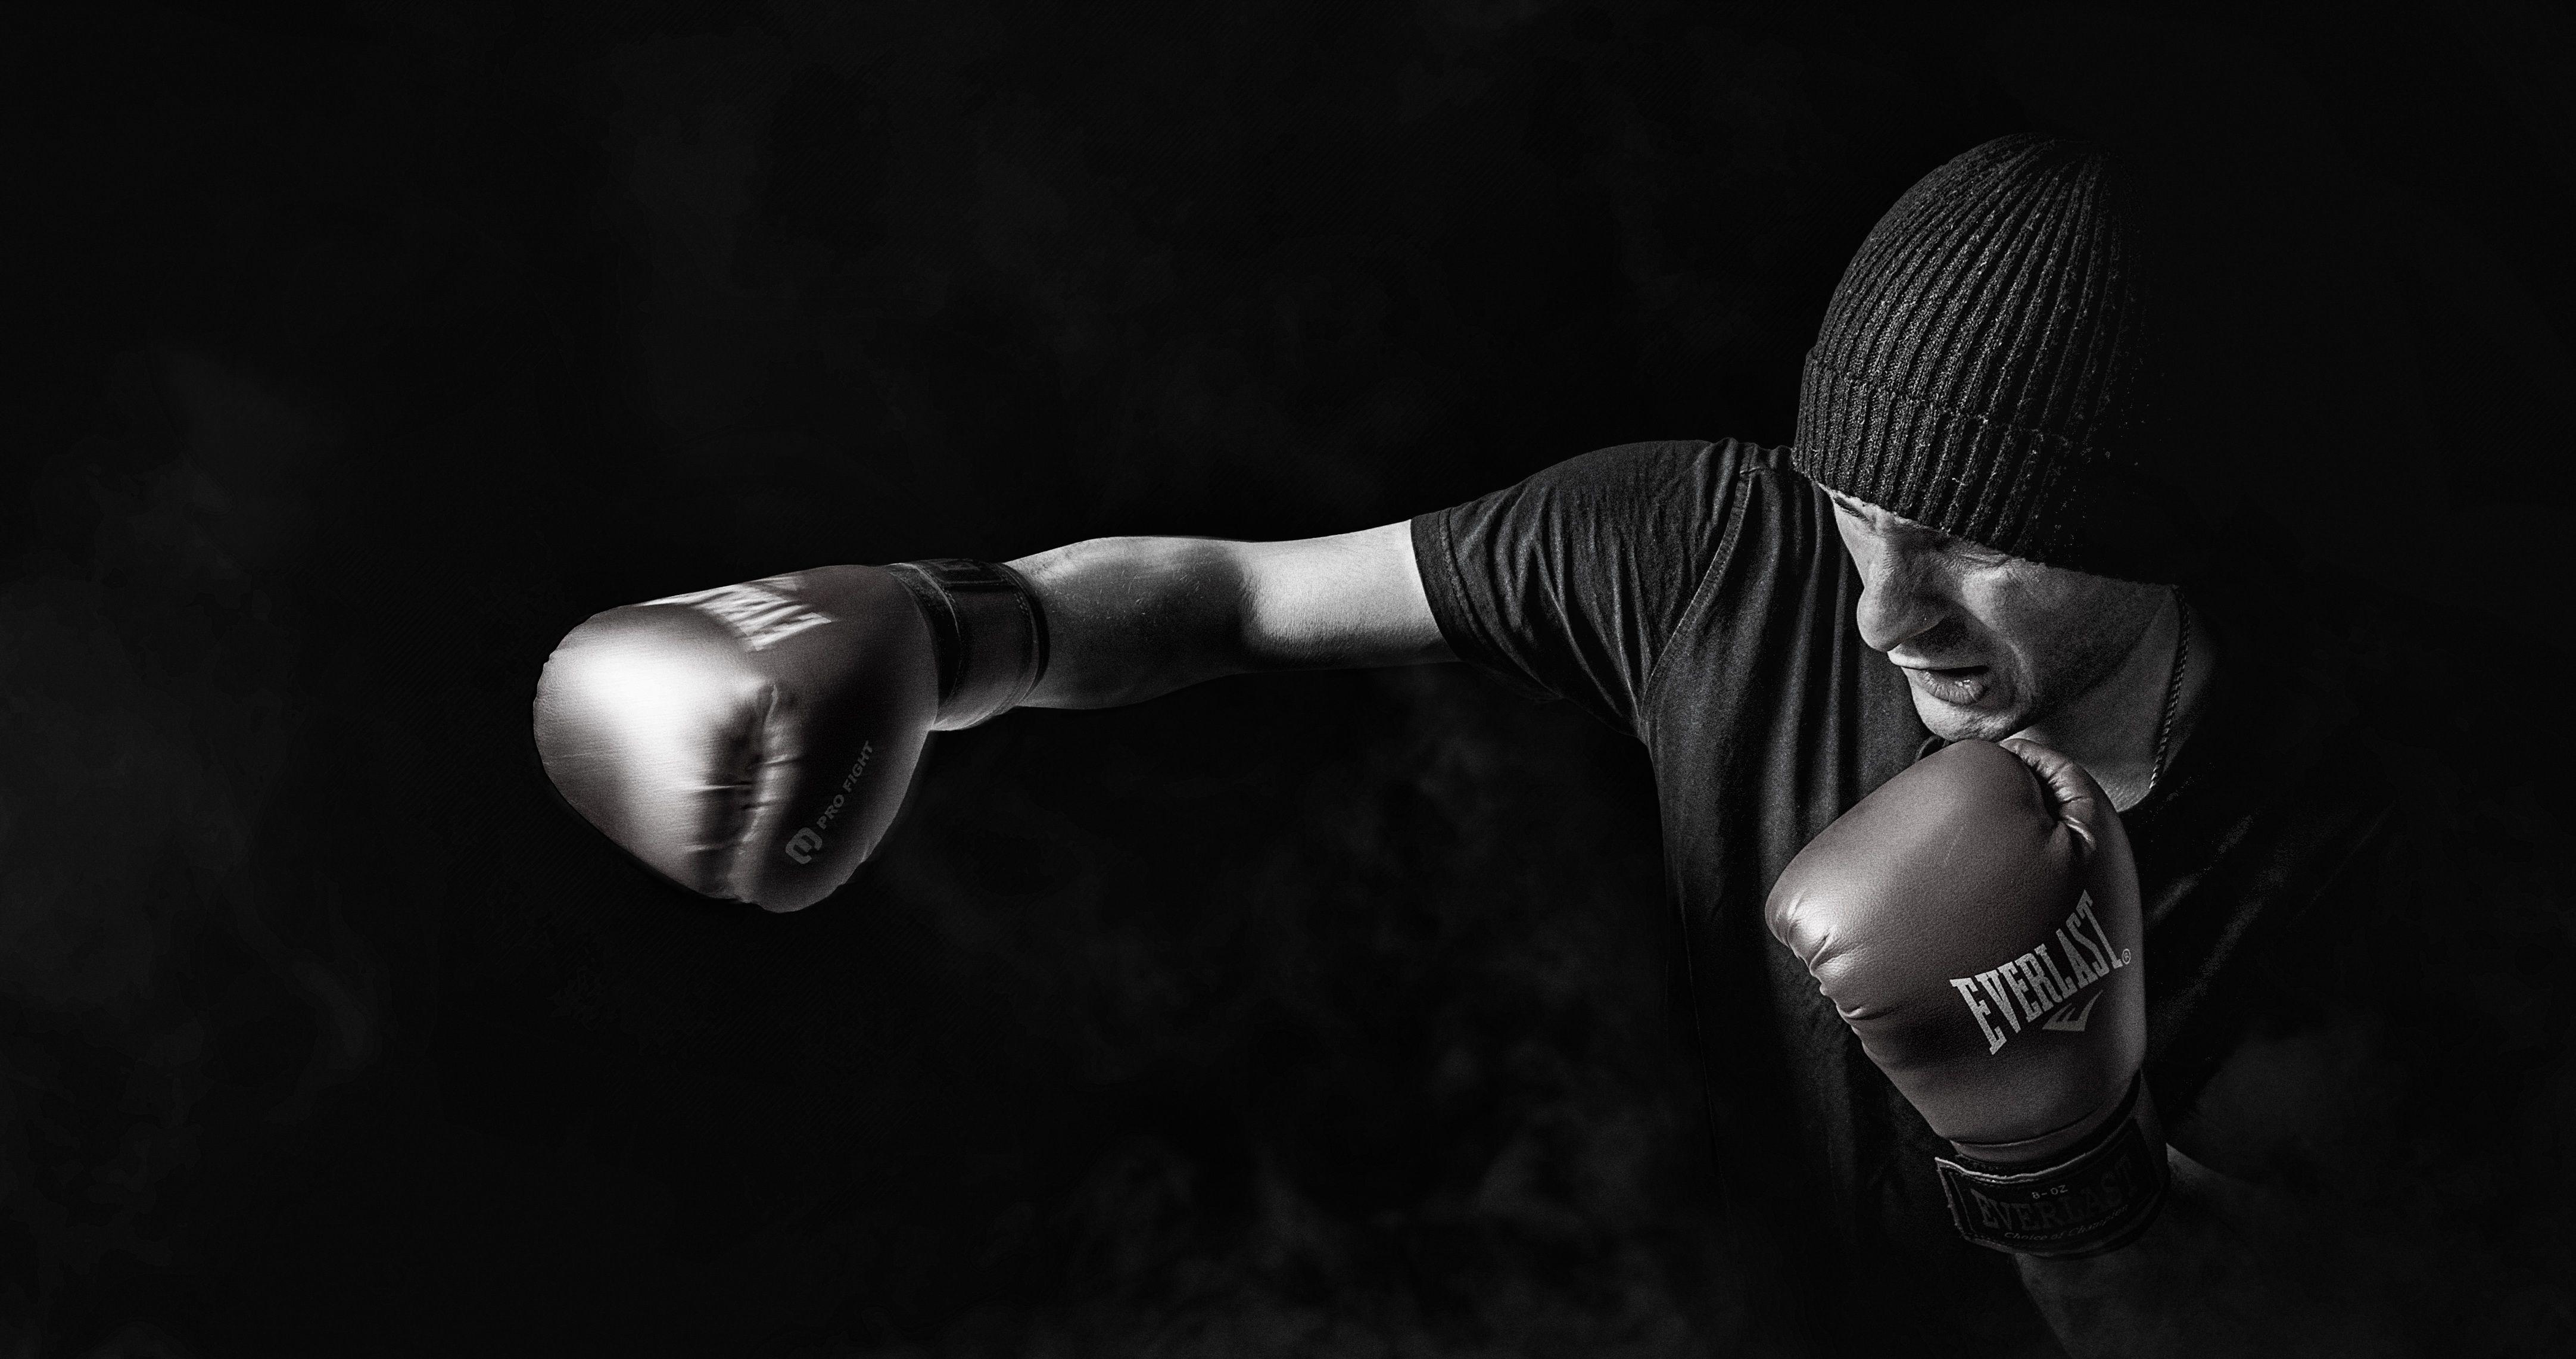 Kickboxing 4k, HD Sports, 4k Wallpaper, Image, Background, Photo